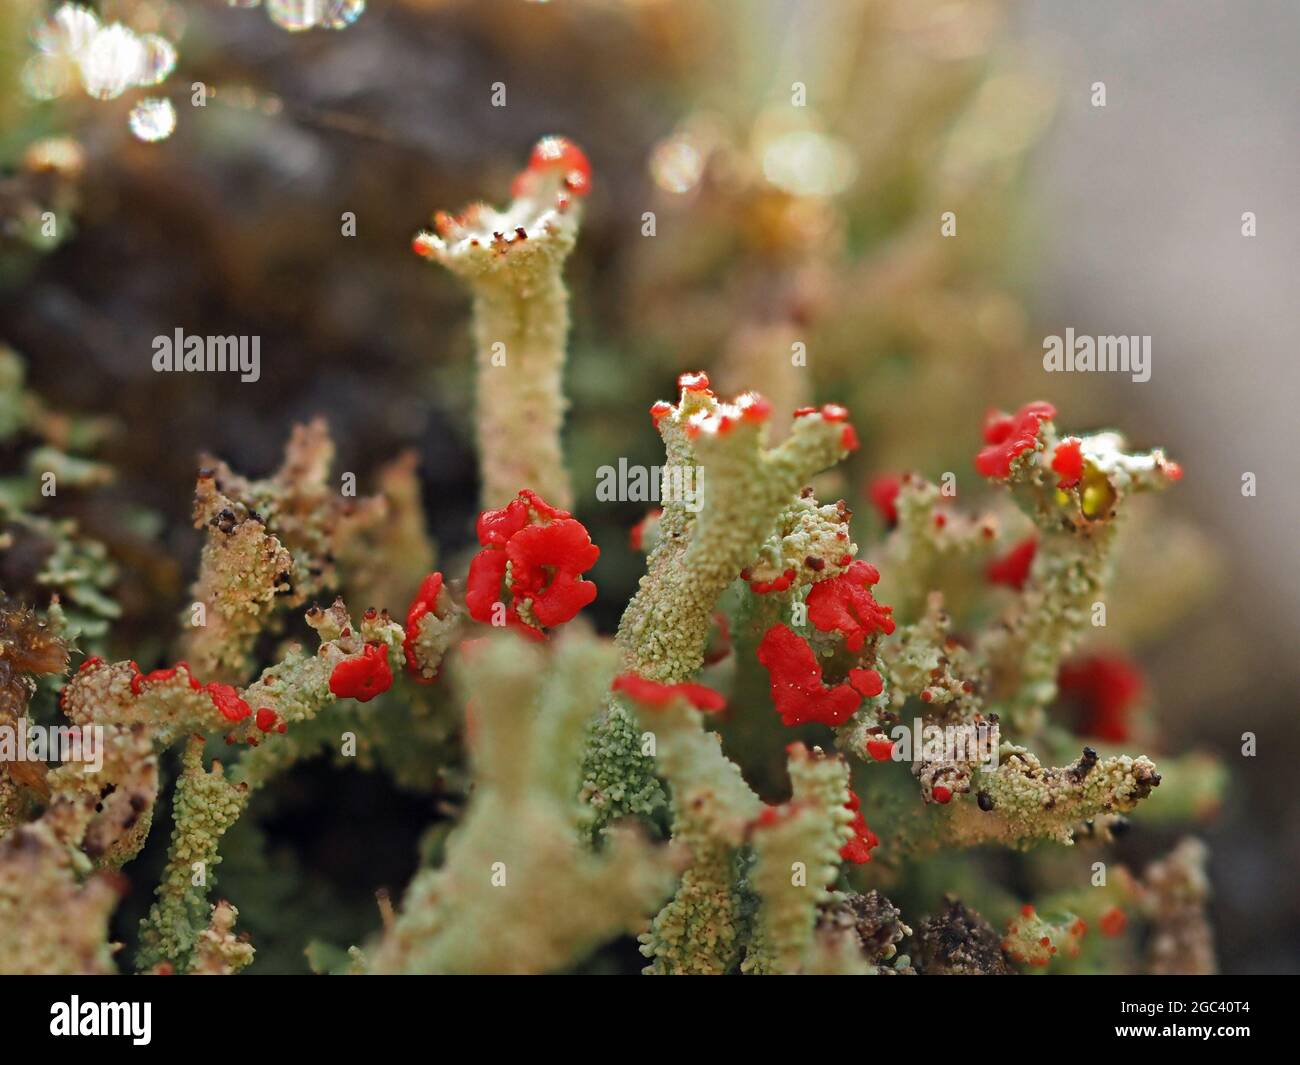 Tiny World - corpi fruttati rossi di Cladonia cristatella – soldati britannici lichens su gambi frilly grigi in Cumbria Inghilterra UK Foto Stock